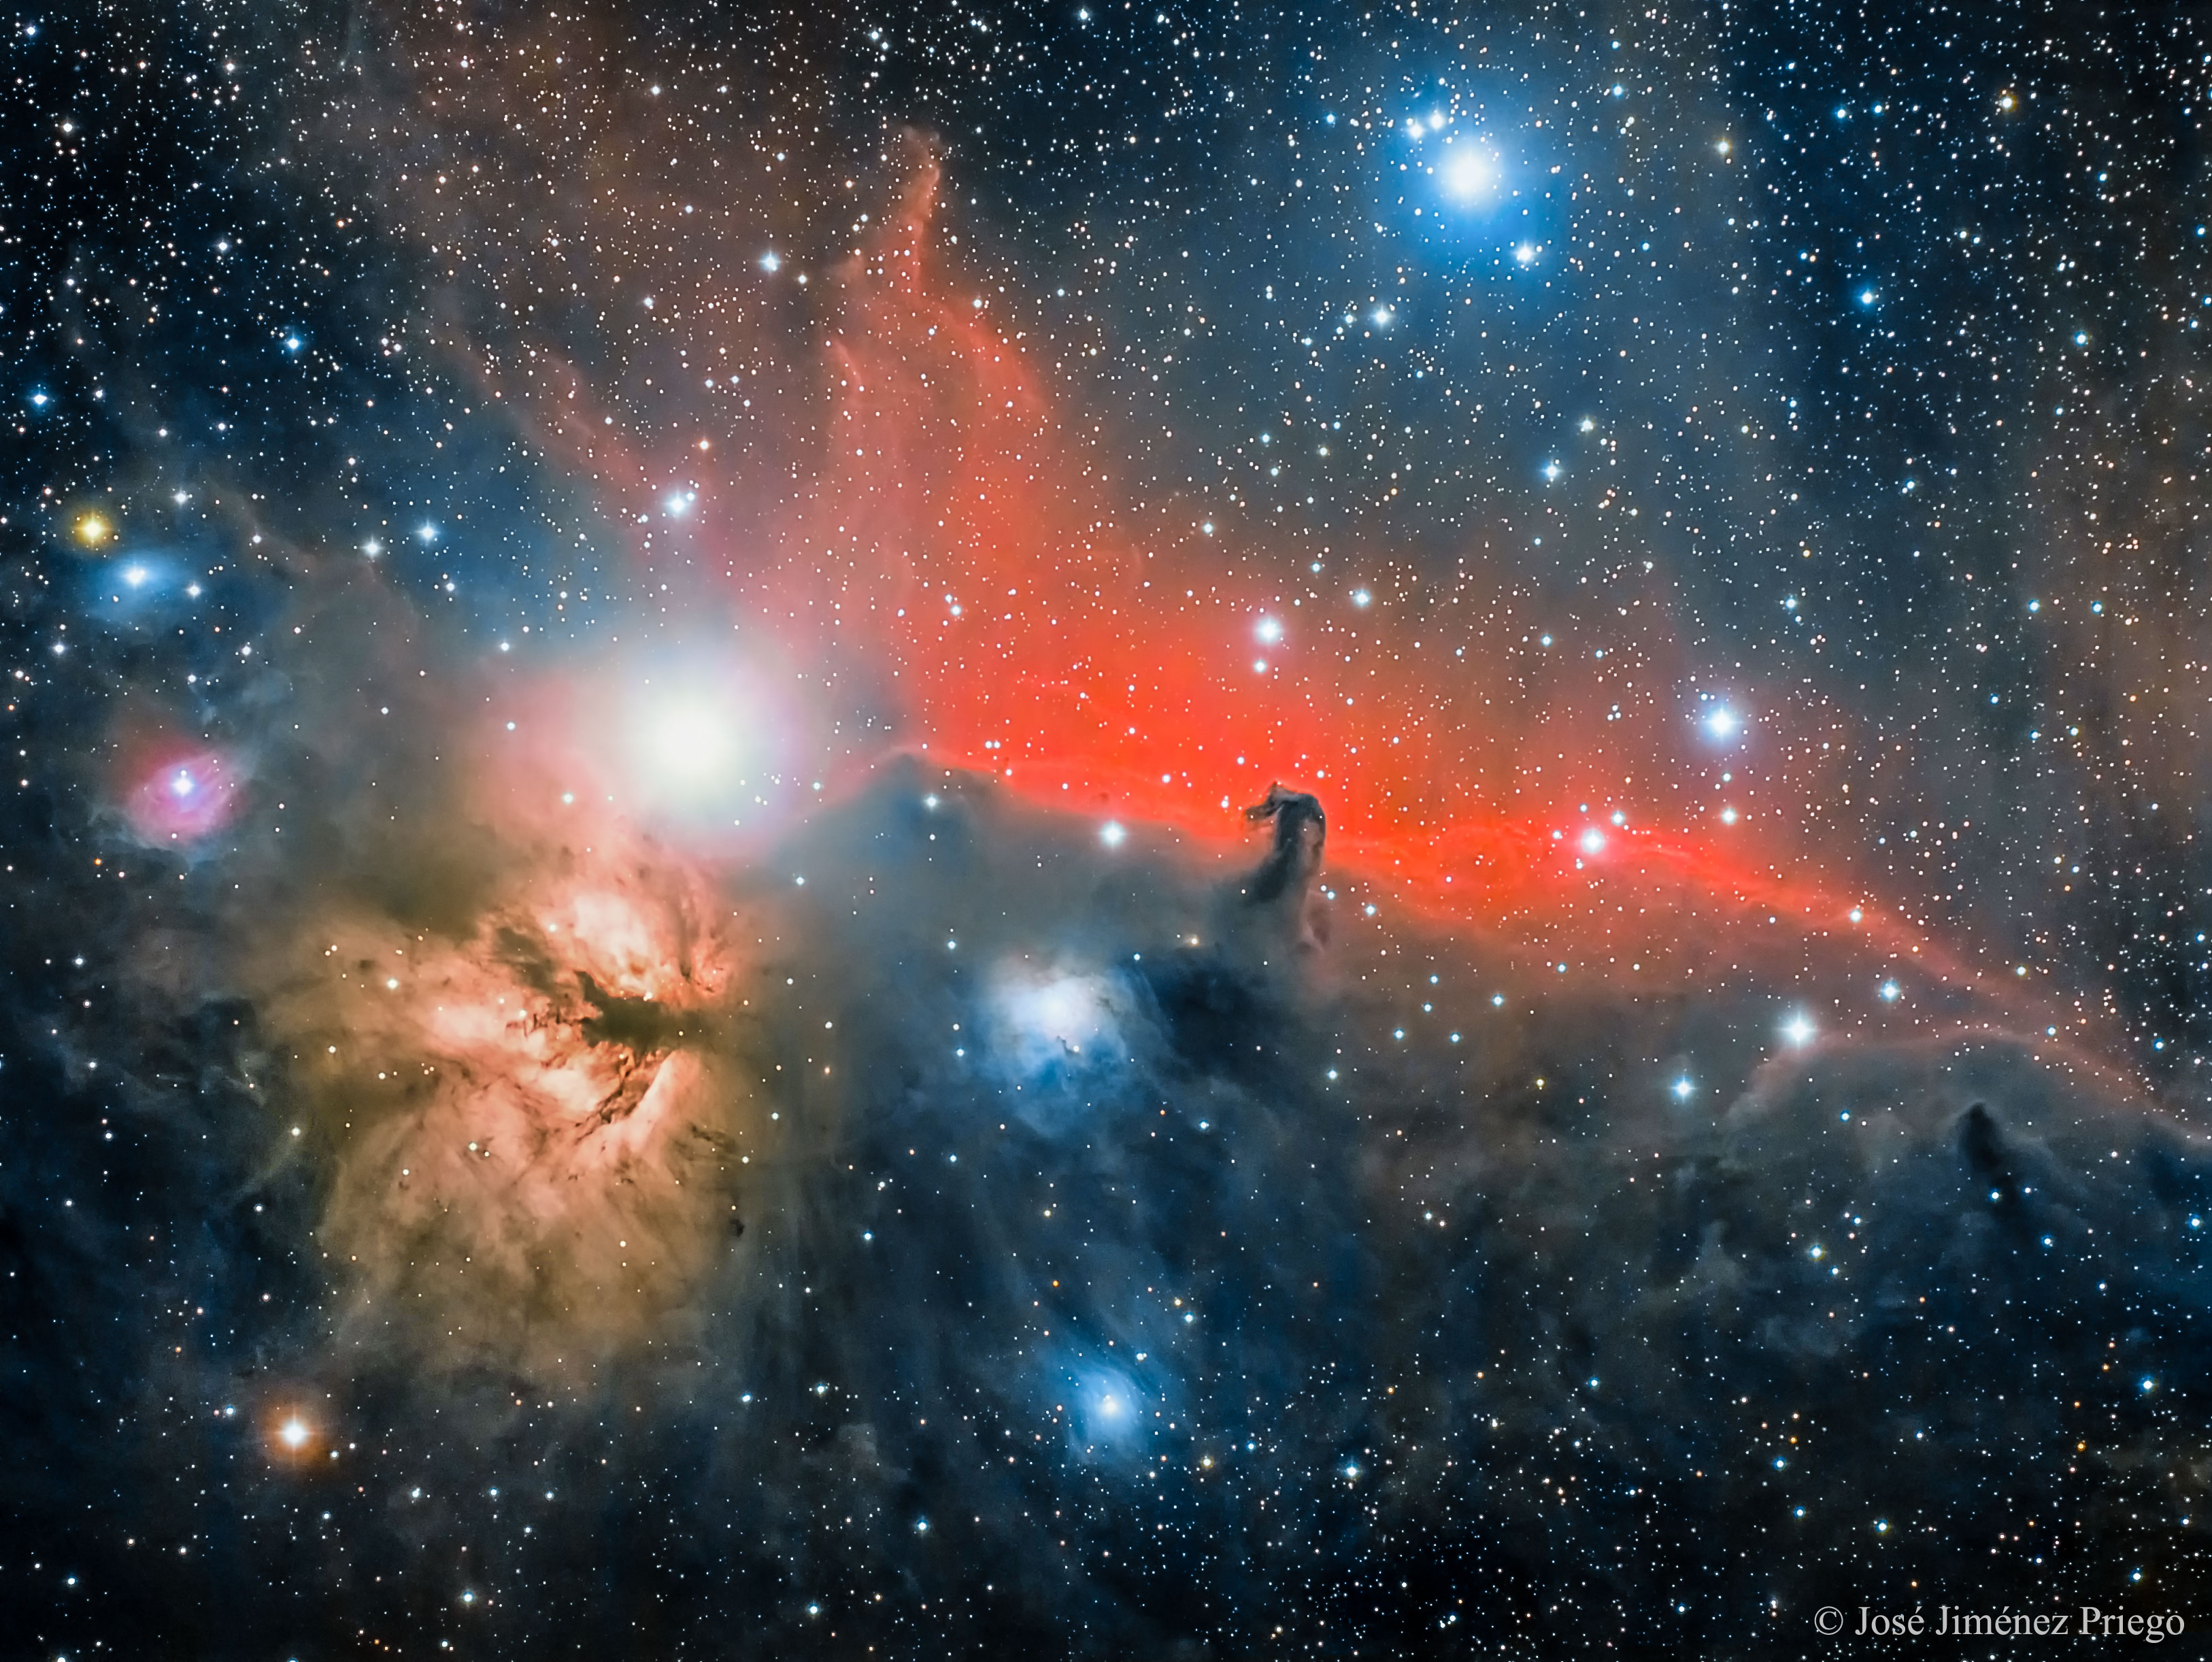 APOD: 2015 December 16 - The Horsehead Nebula